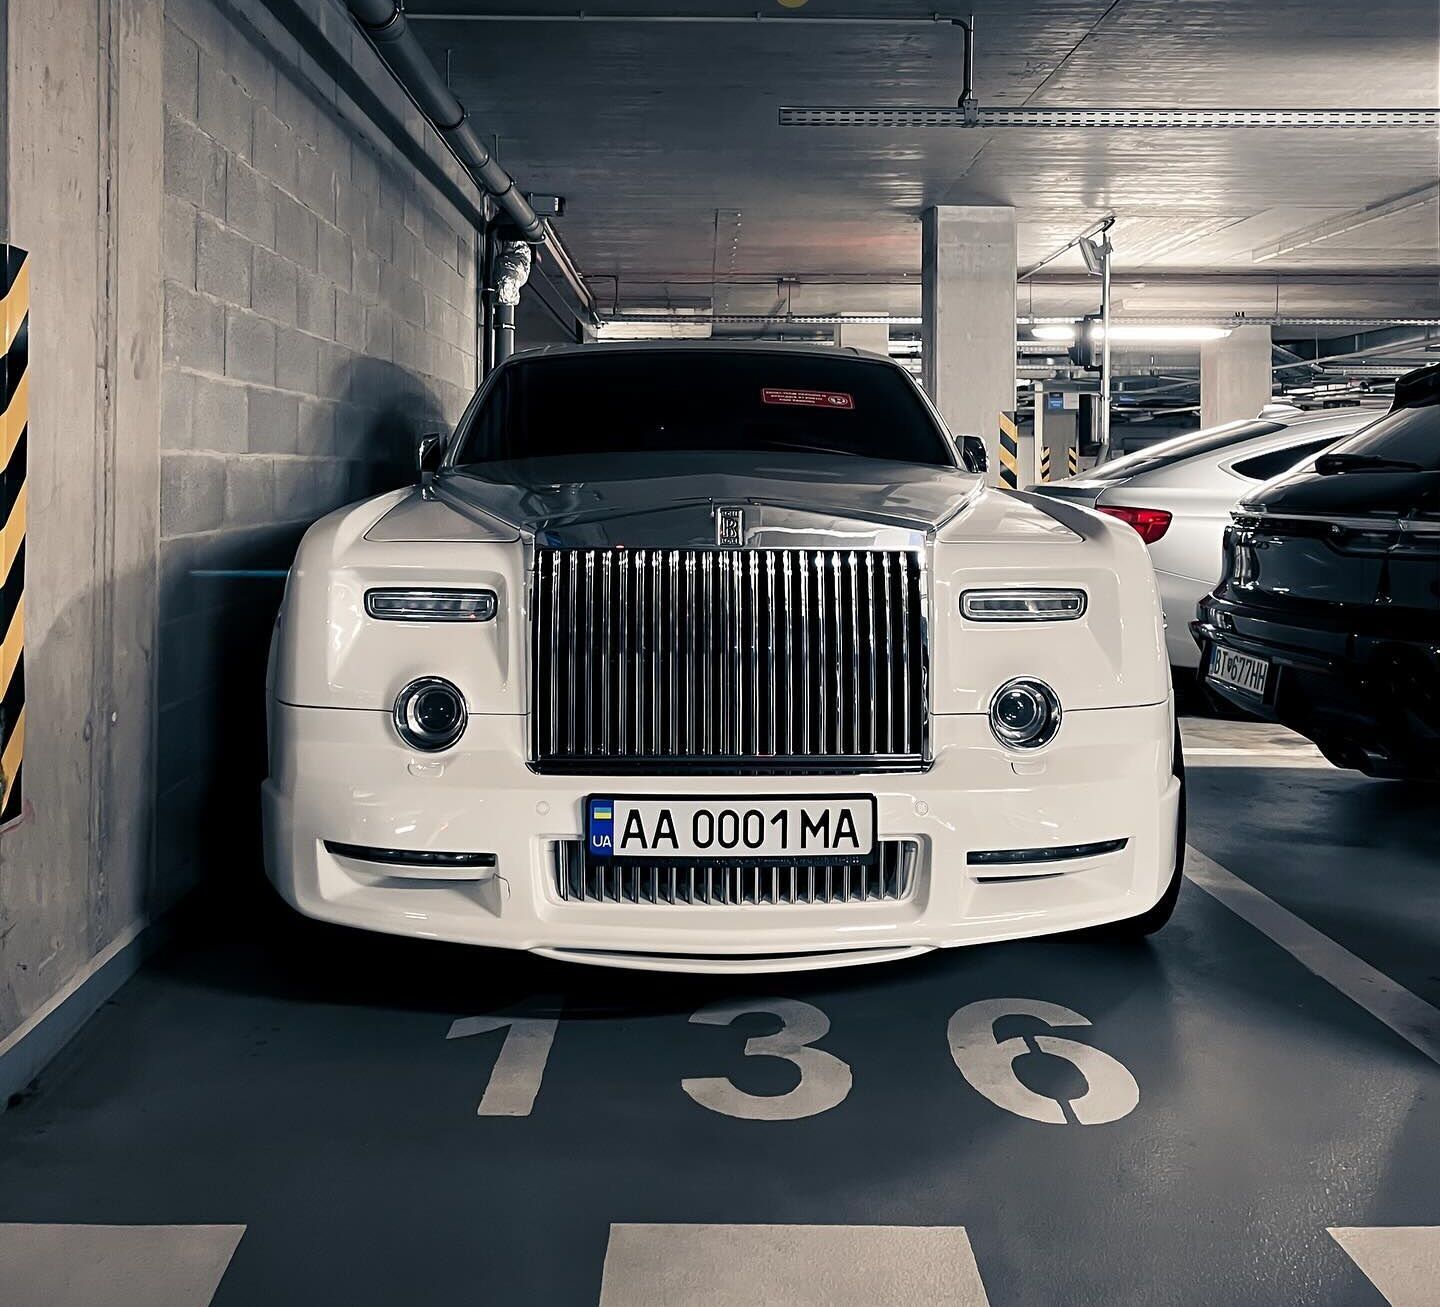 A rare Rolls-Royce Phantom spotted in Bratislava